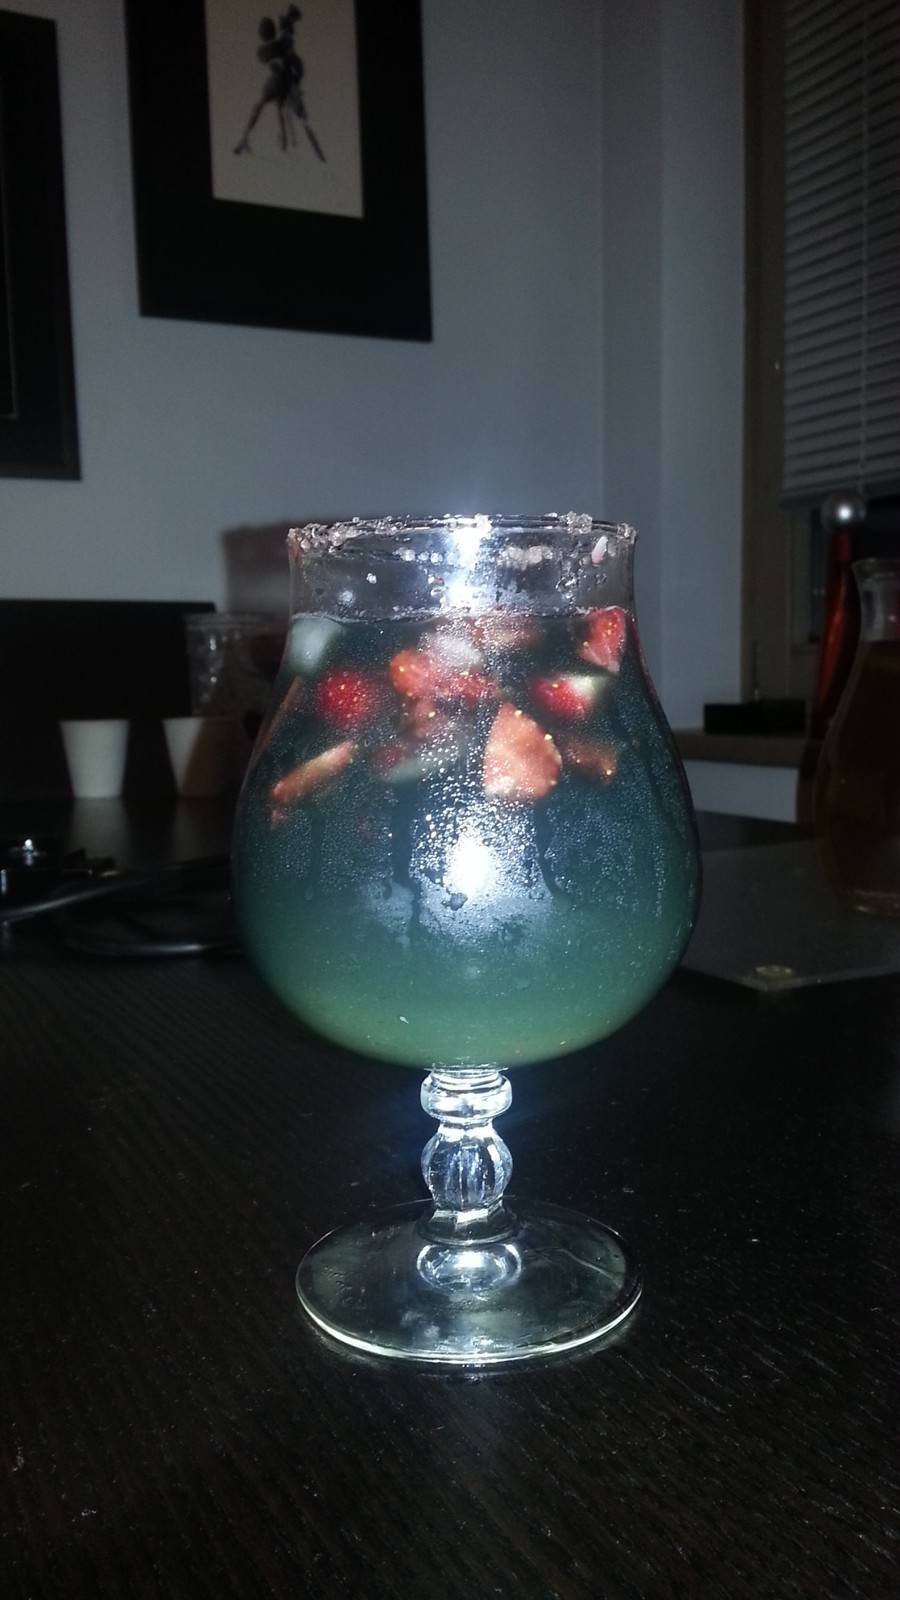 Halloween-Cocktail